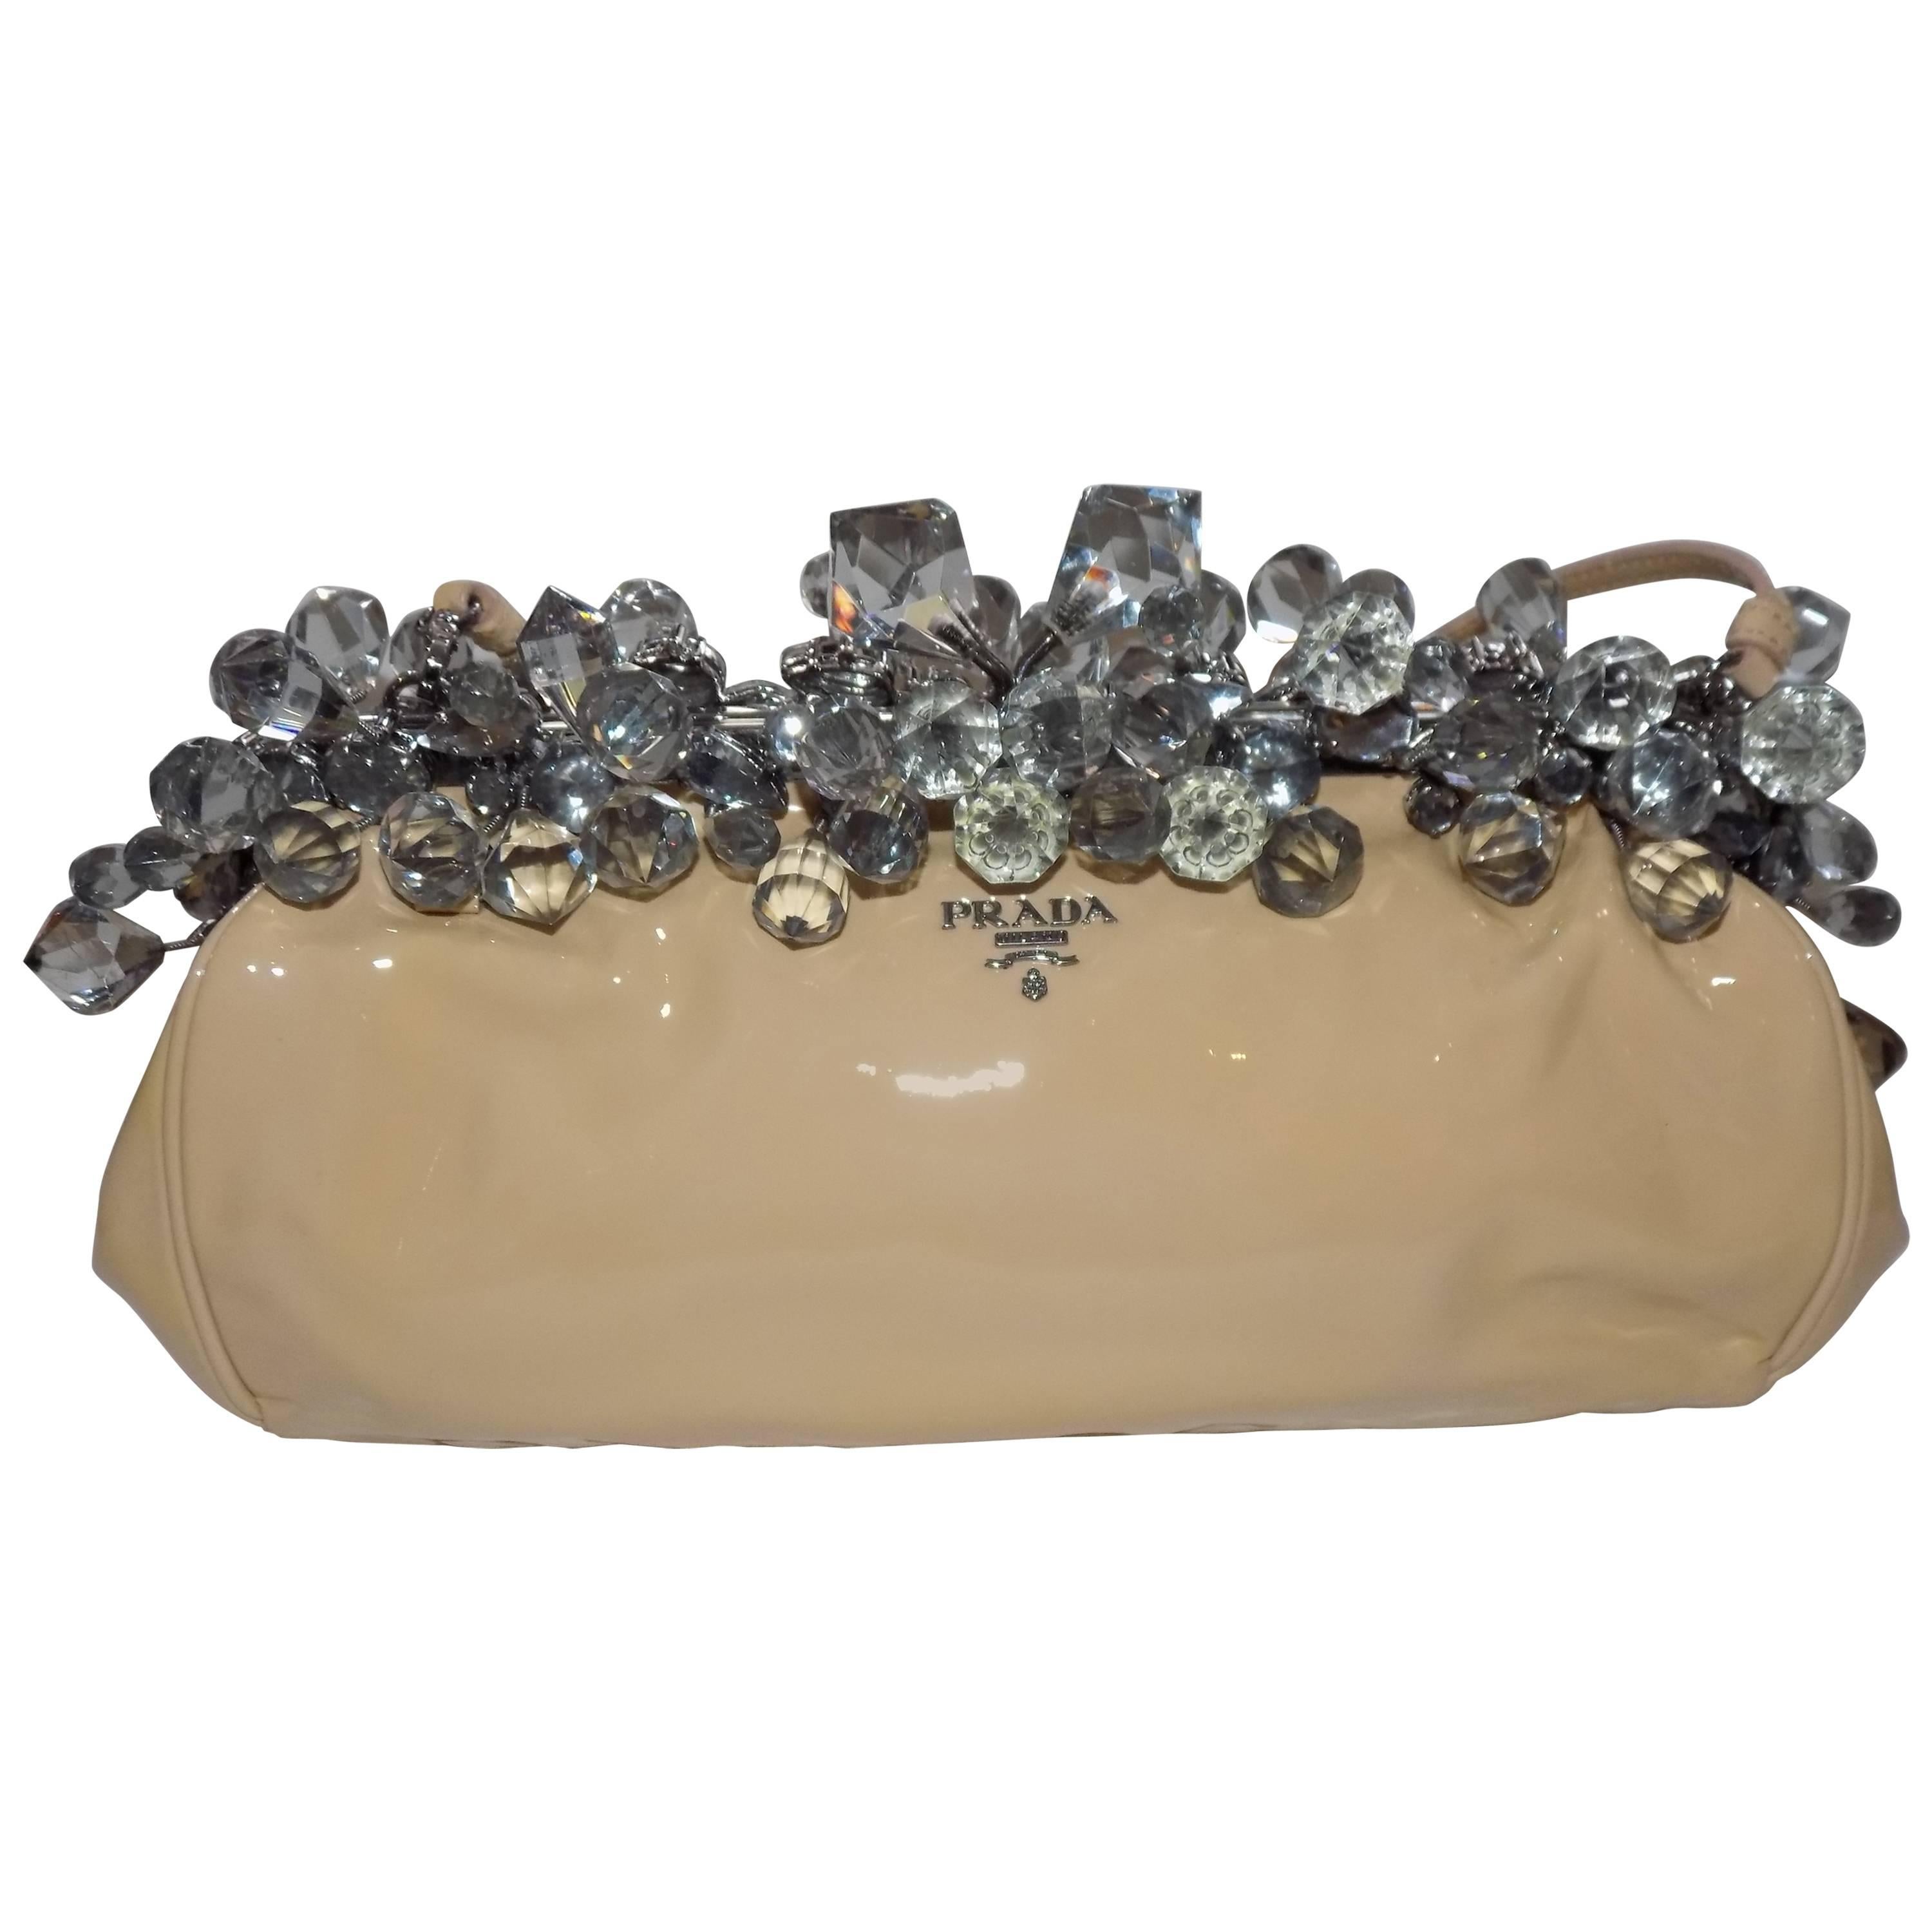 Prada nude Patent Leather Crystal Encrusted Clutch Bag 